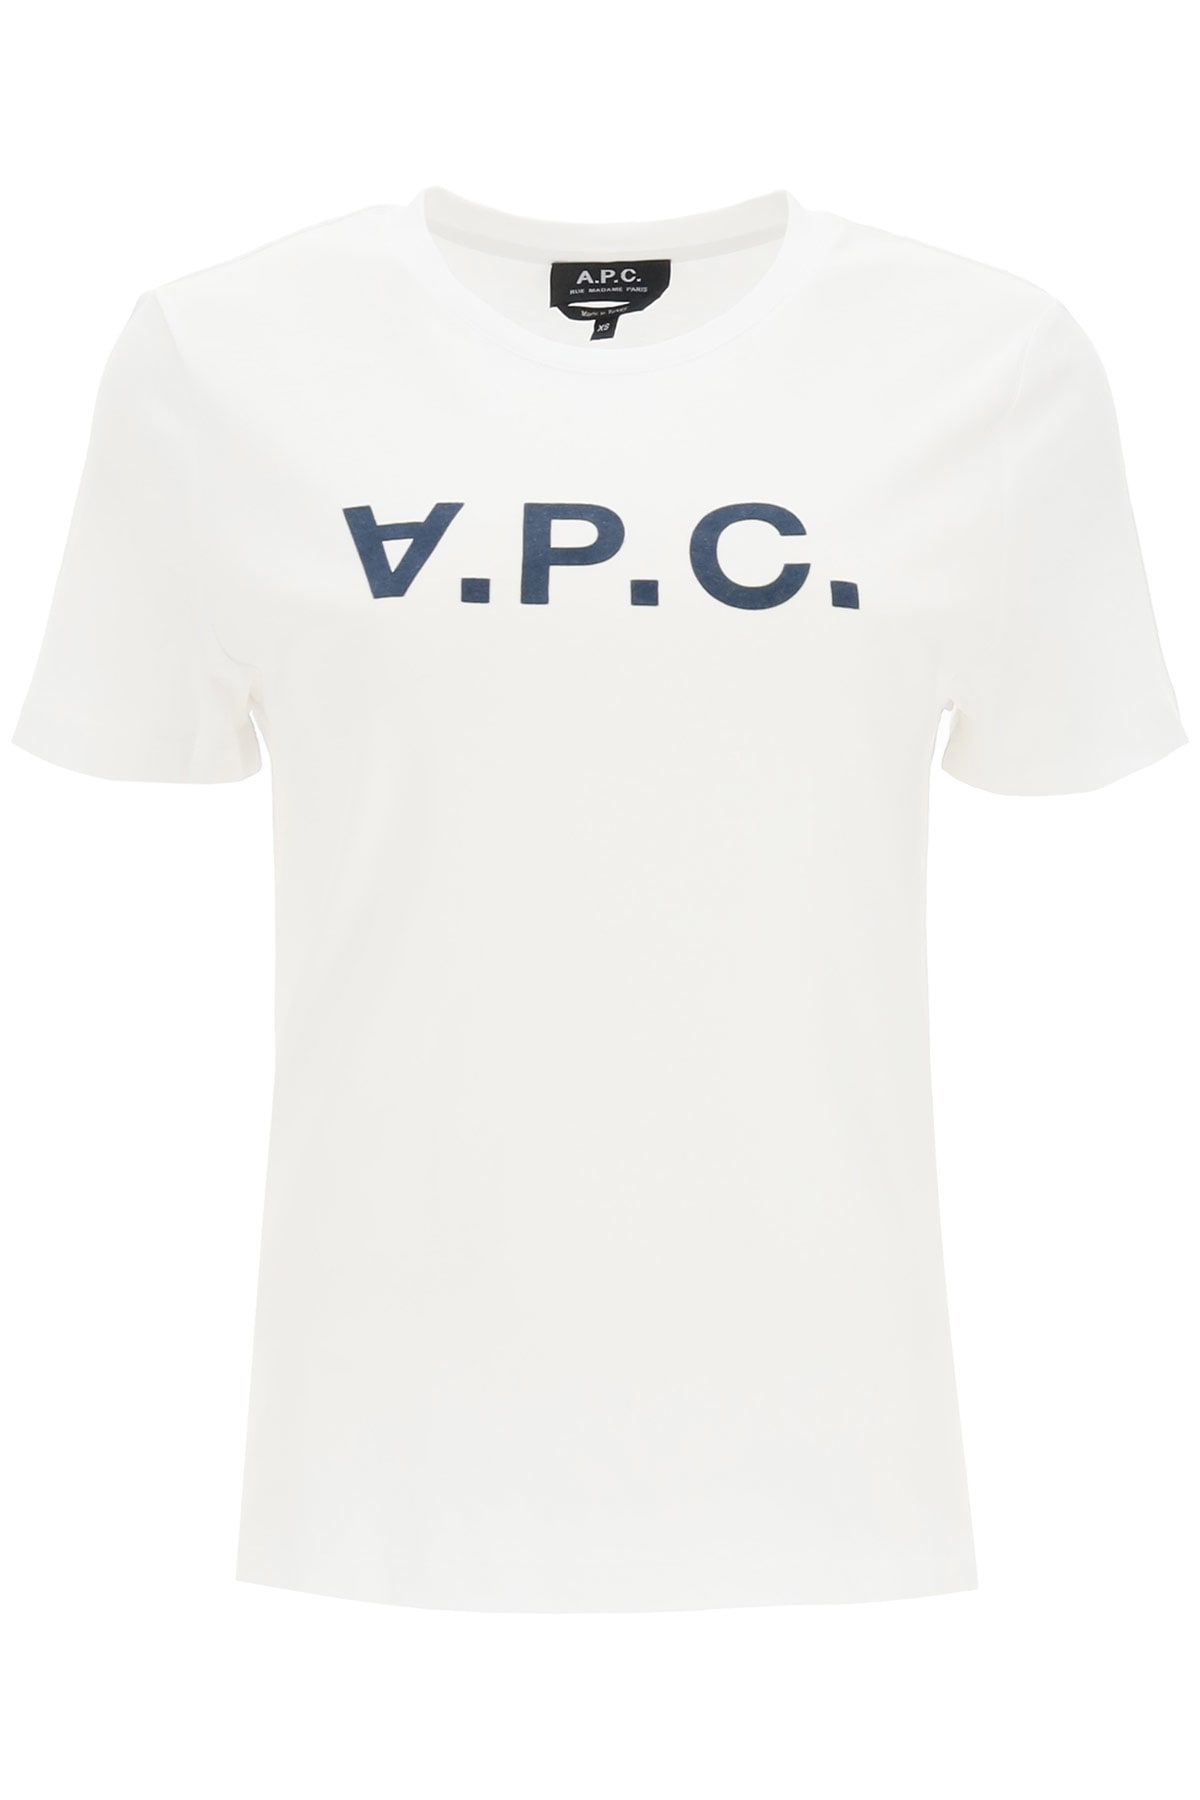 A.P.C. Vpc Logo Flock T-shirt